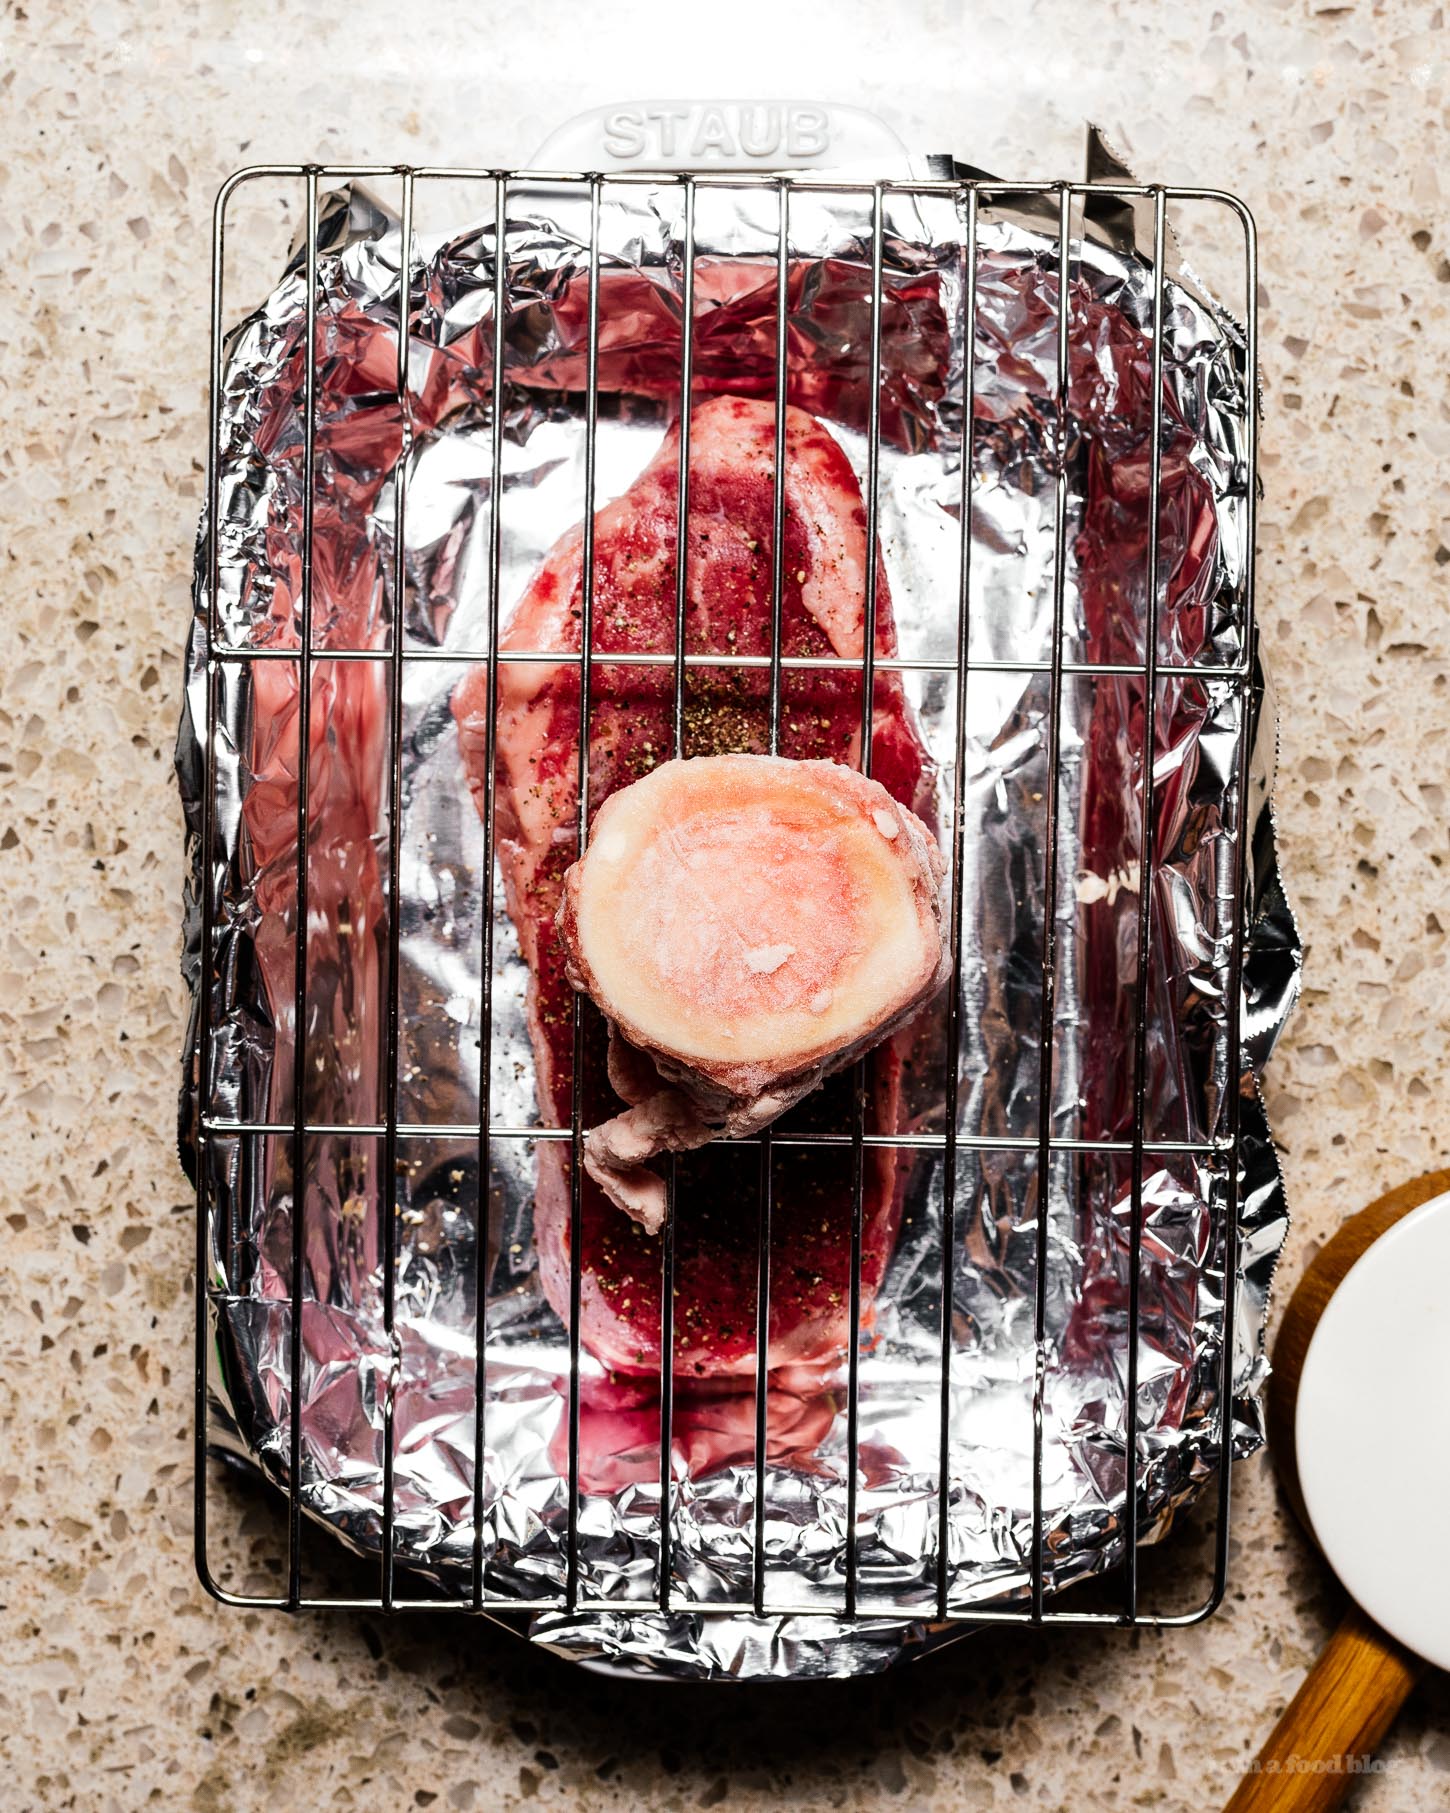 Oven roasted steak with Japanese chimichurri, roasted bone marrow, and jammy eggs